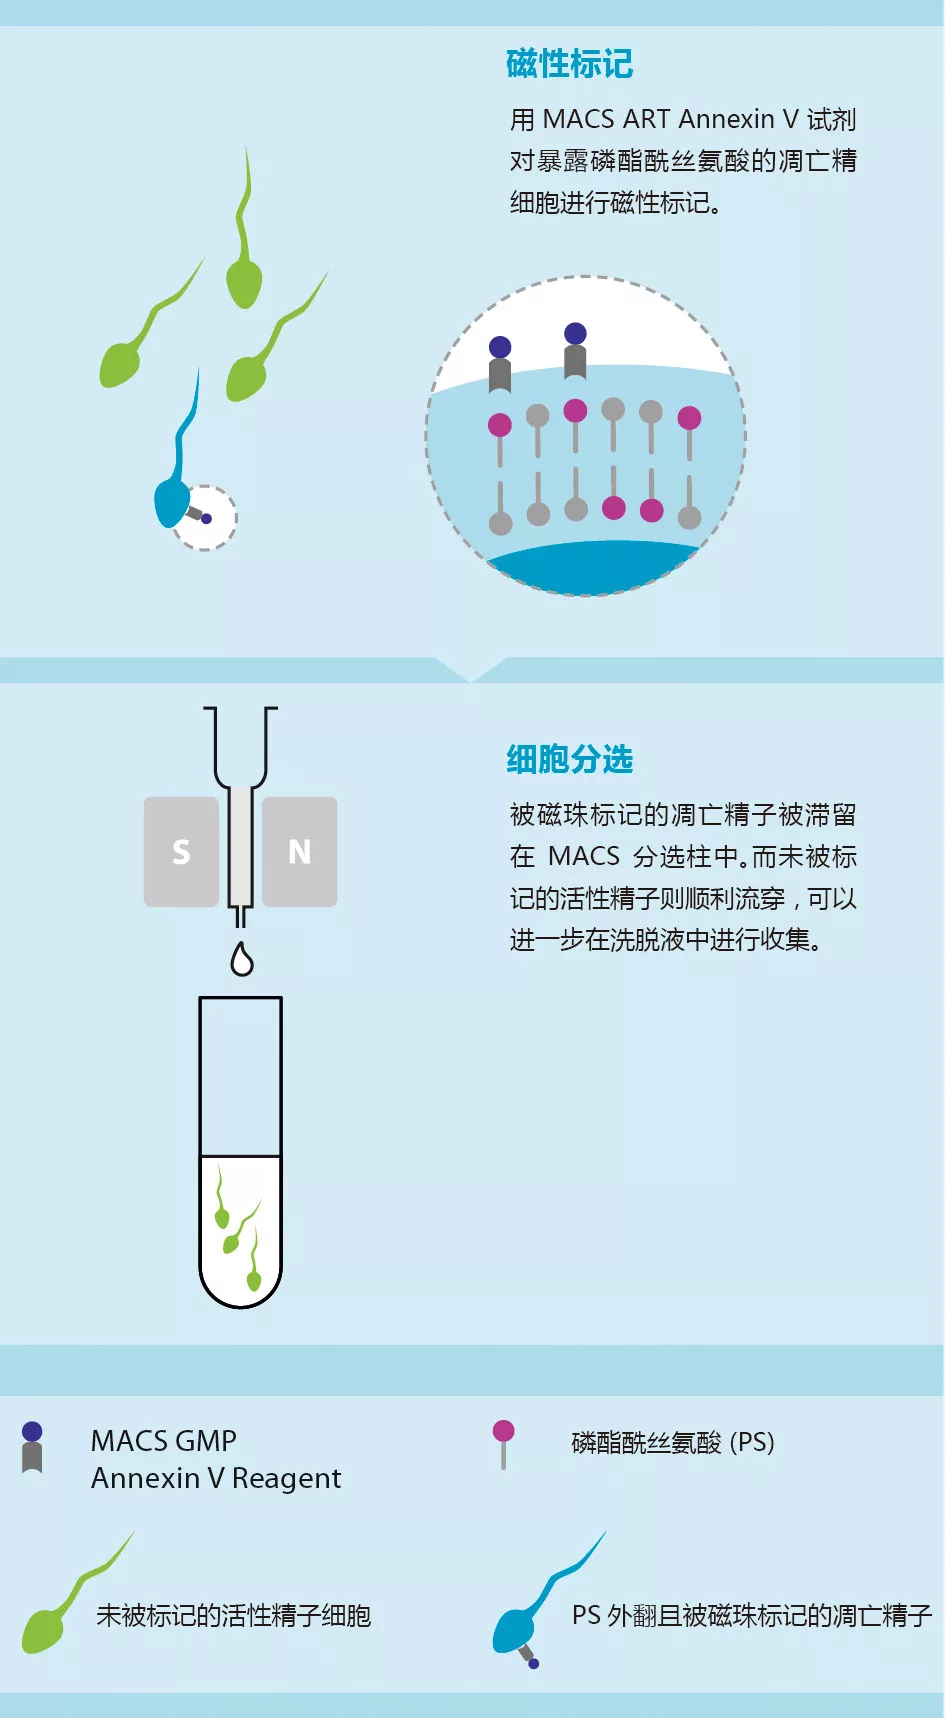 NEW【精子筛选】MACS ART Annexin V System，有效去除凋亡精子，提高辅助生殖成功率